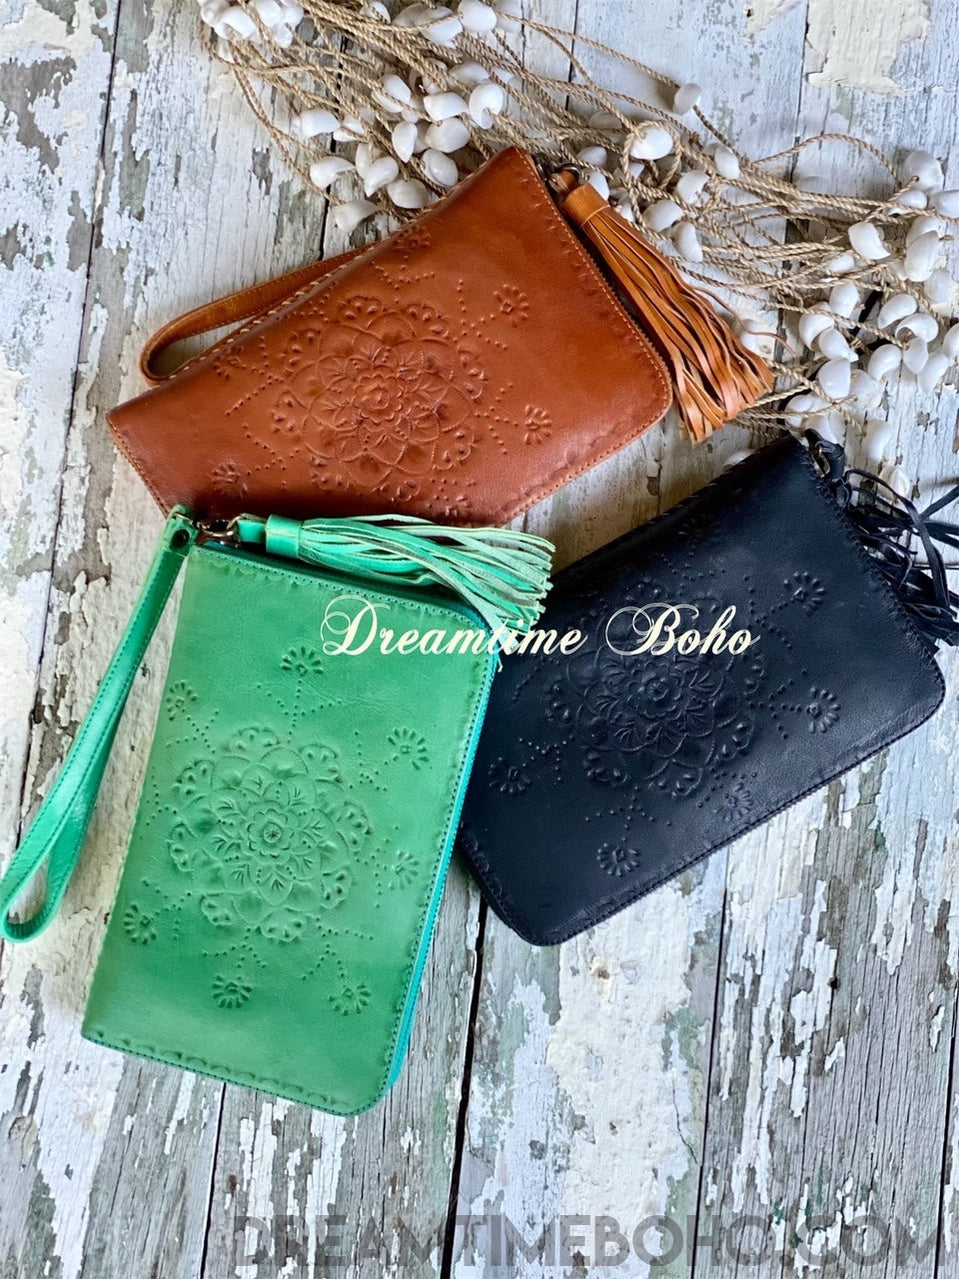 Timberland Women's RFID Leather Crossbody Bag Wallet Purse - Macy's